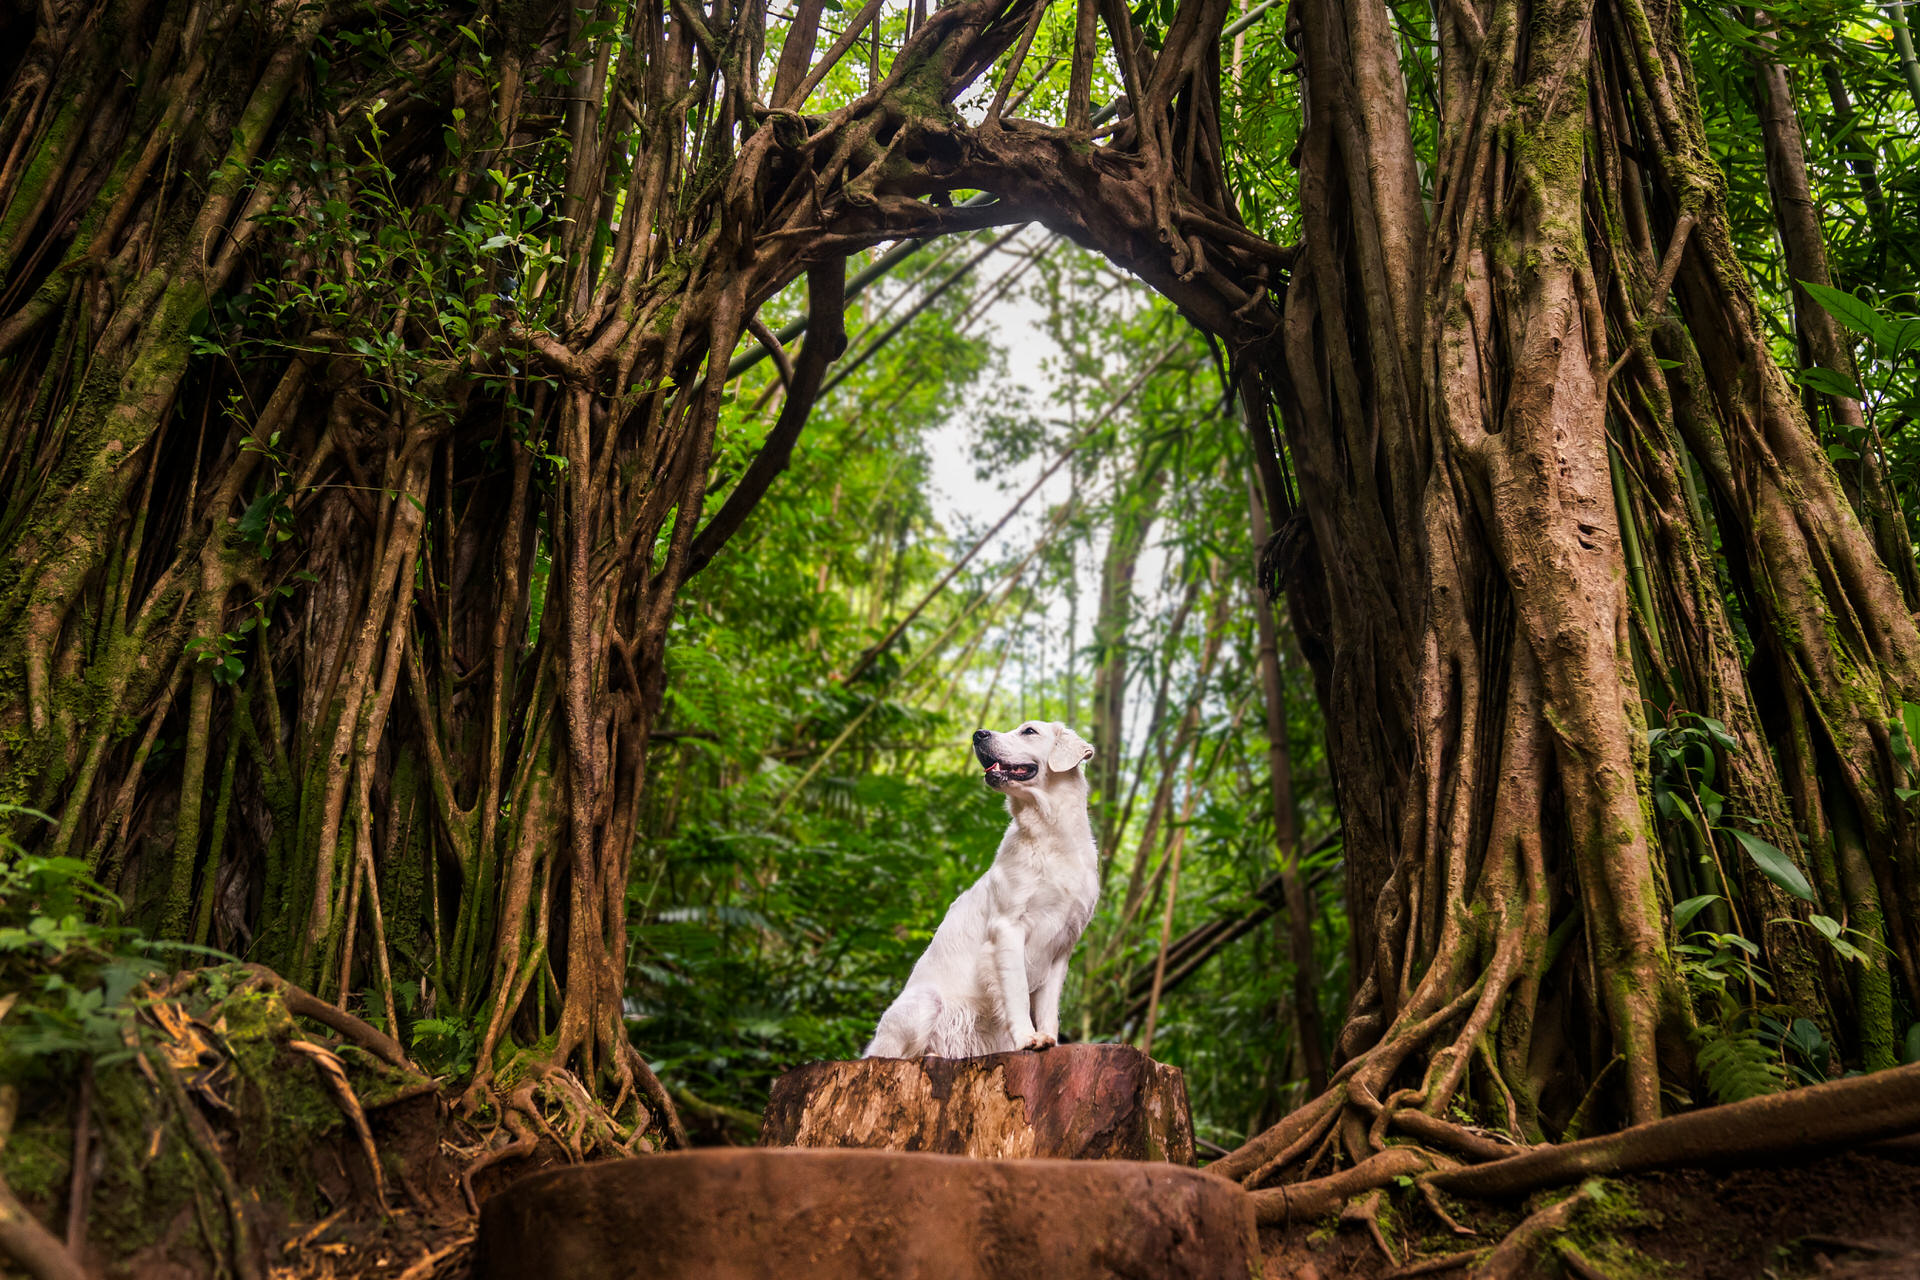 Dog sitting under forest banyan tree canopy.